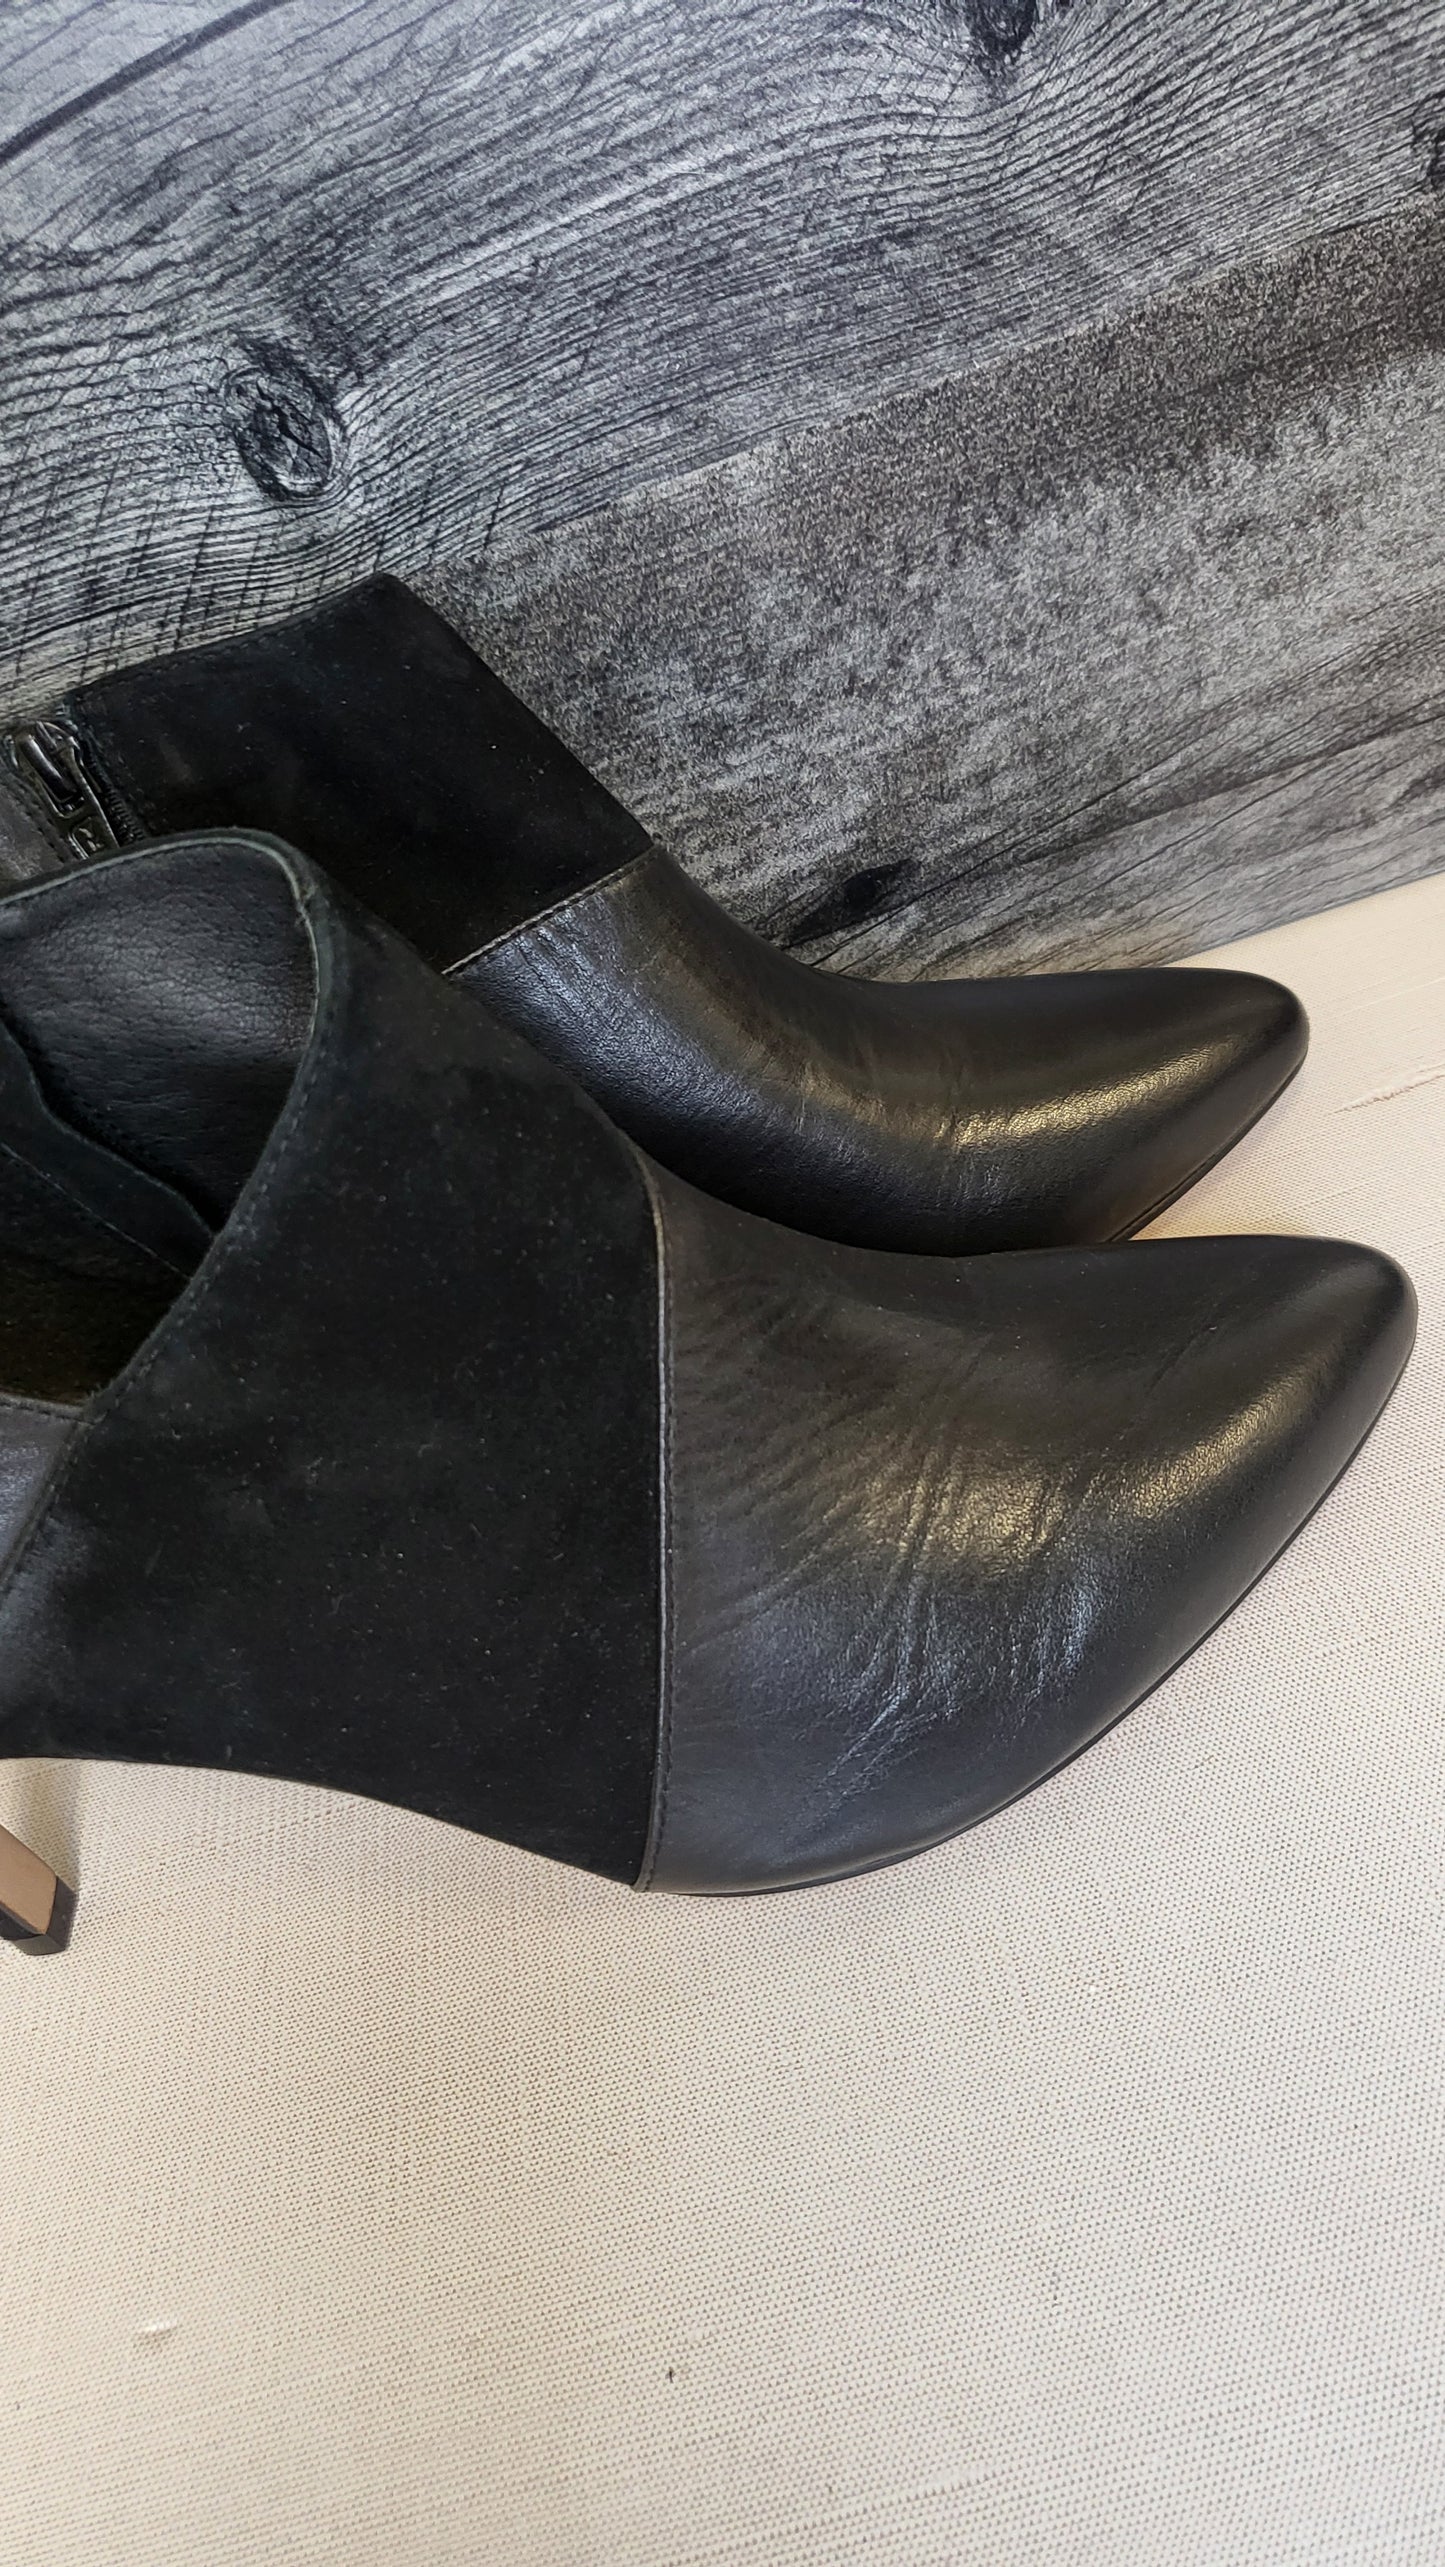 Isabella Anselmi Black Stiletto Ankle Boot (41)